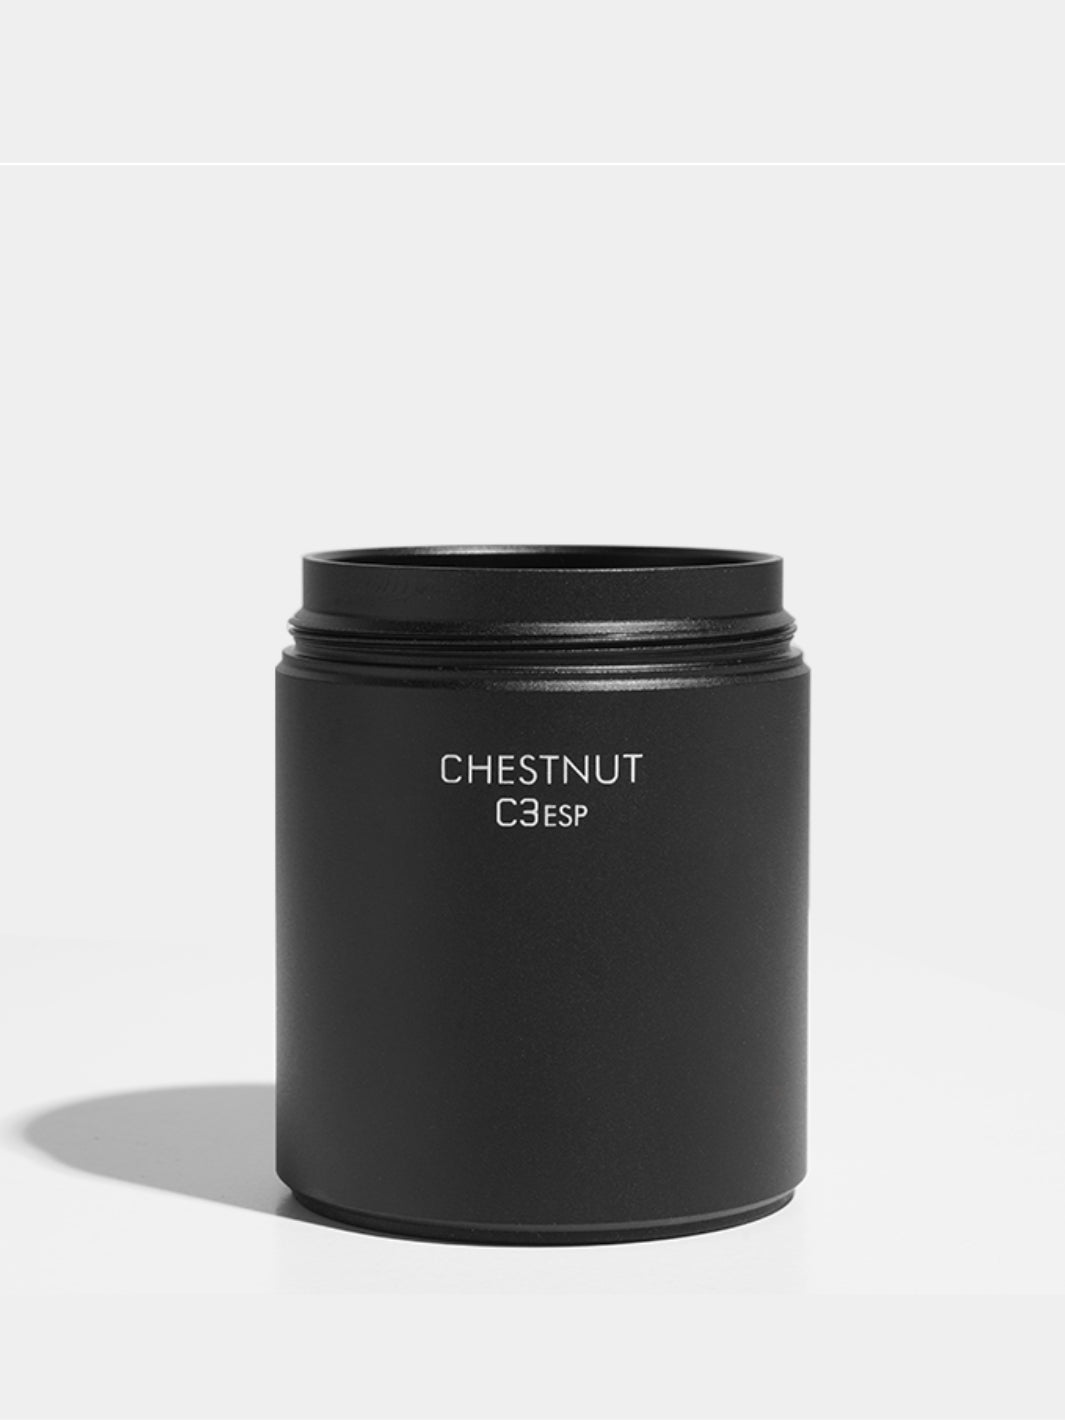 TIMEMORE Chestnut C3 ESP Grinder